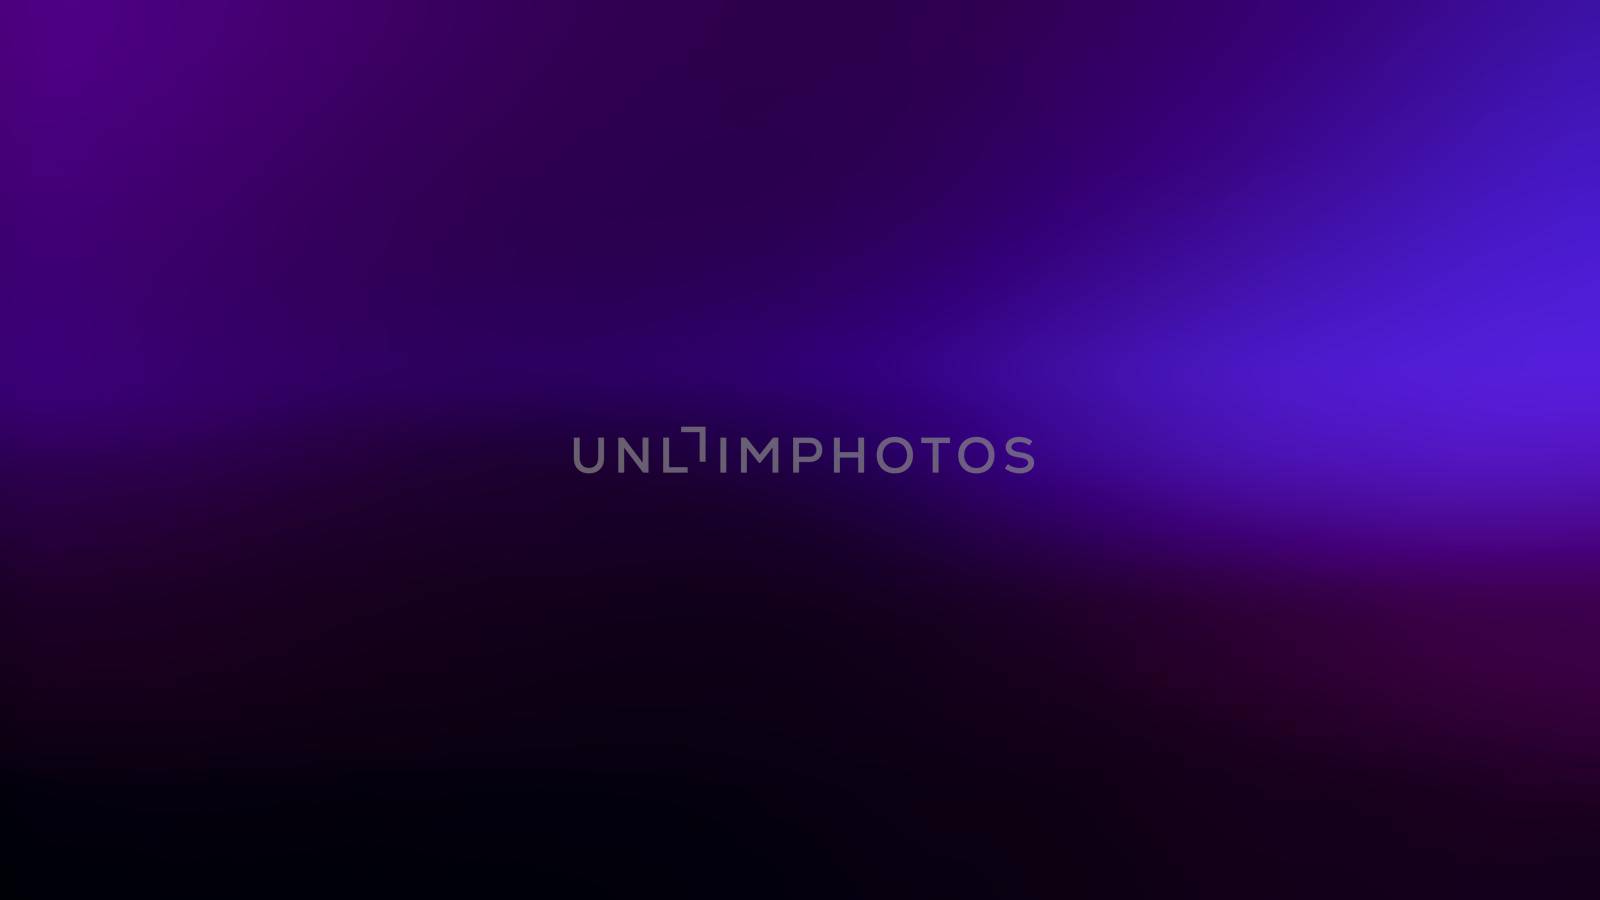 Neon blue light leaks effect background. Real shot in 4k. by dmitrimaruta